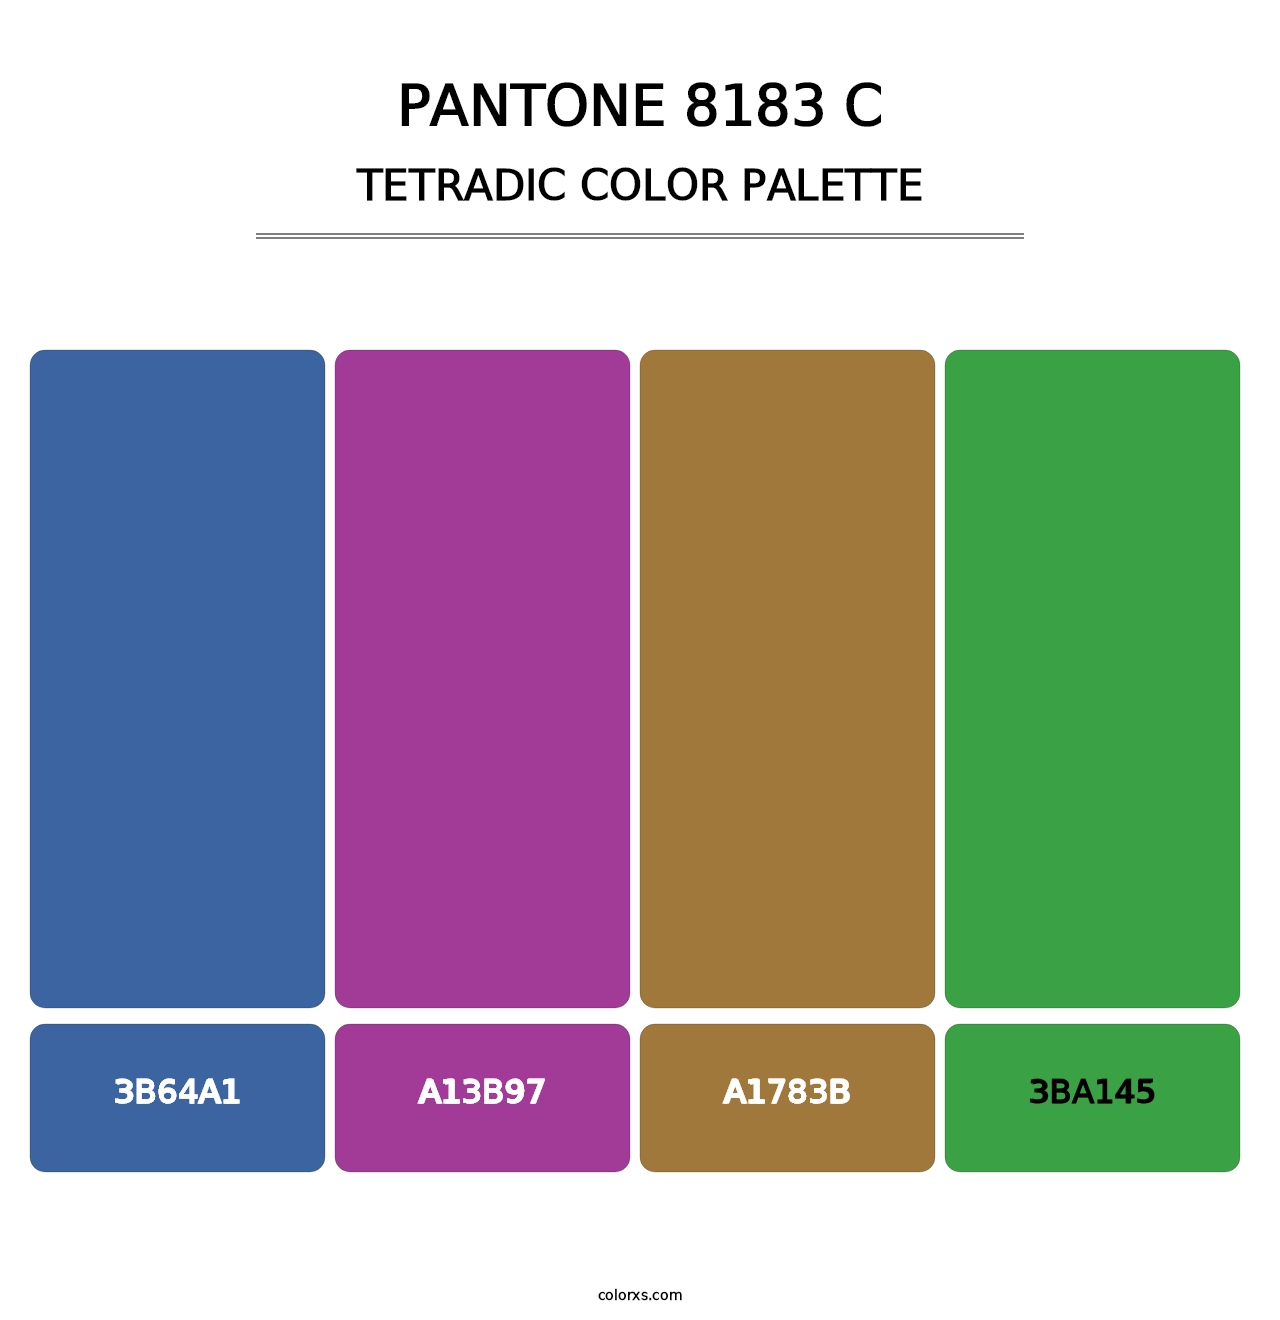 PANTONE 8183 C - Tetradic Color Palette